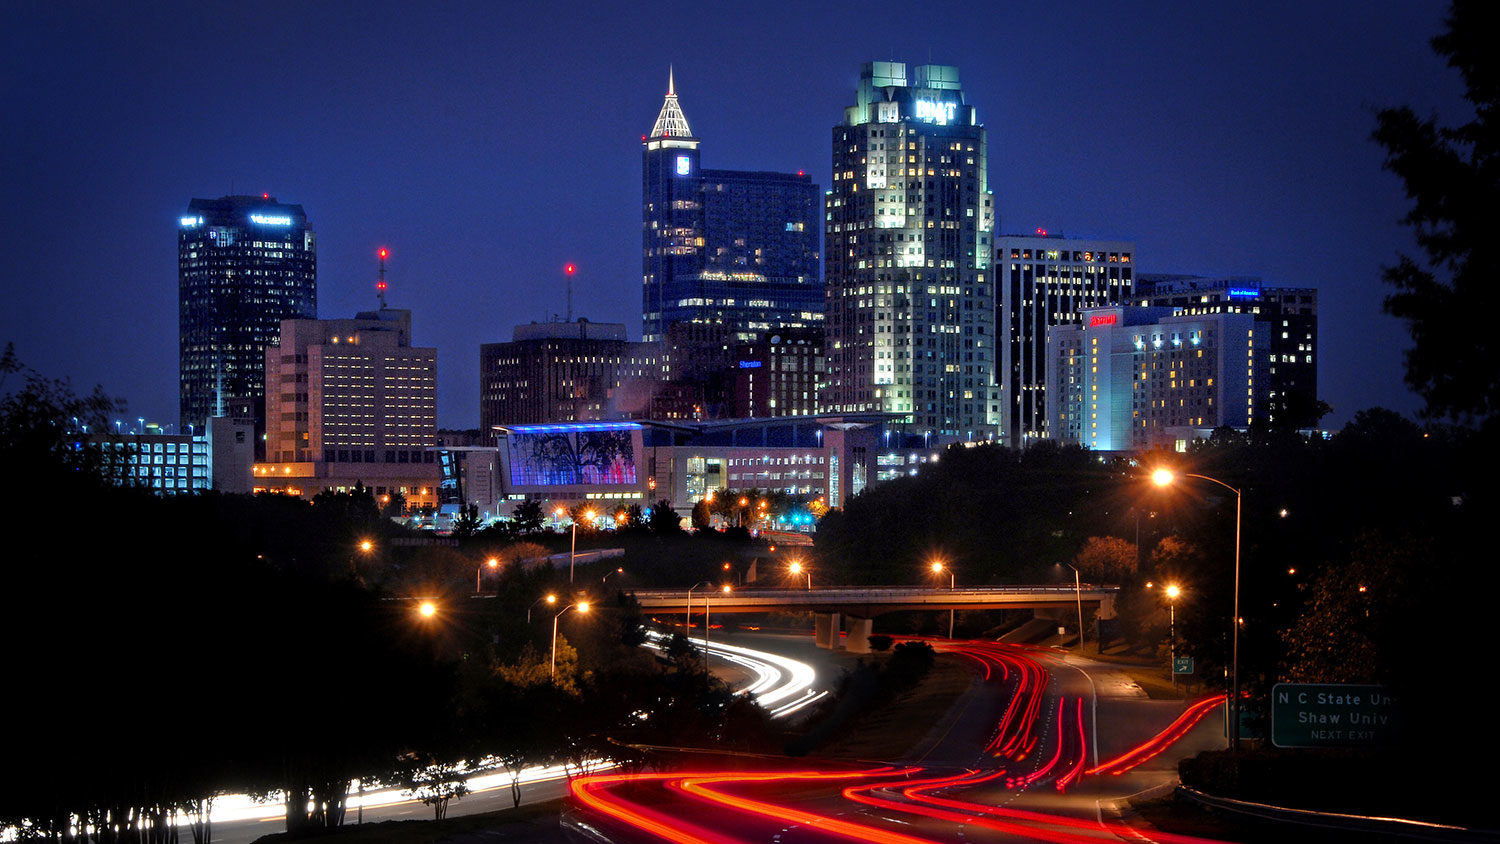 The Raleigh, North Carolina, skyline at night